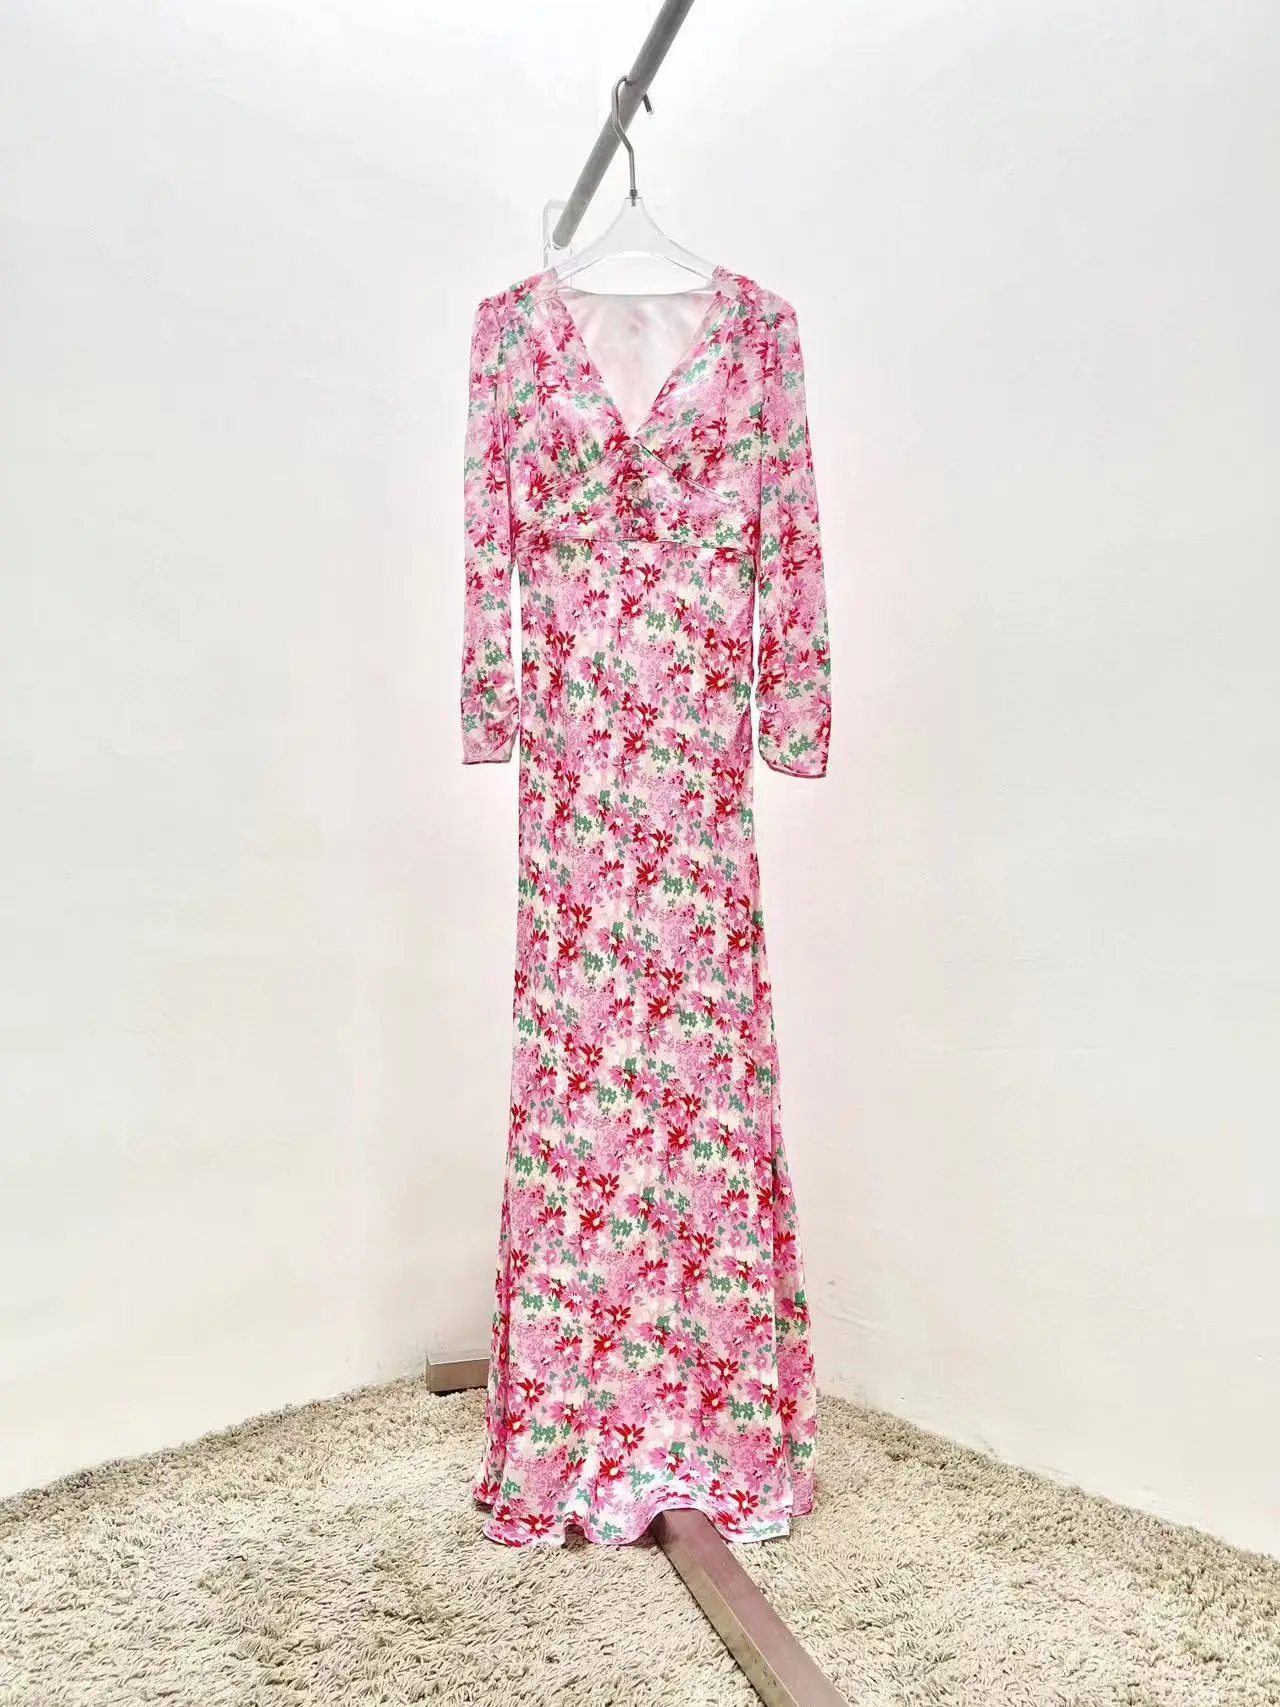 2023 Spring Summer Newest Fashion Runway Long Dress Women's Long Sleeve V-Neck Flowers Printed Designer Top Dress